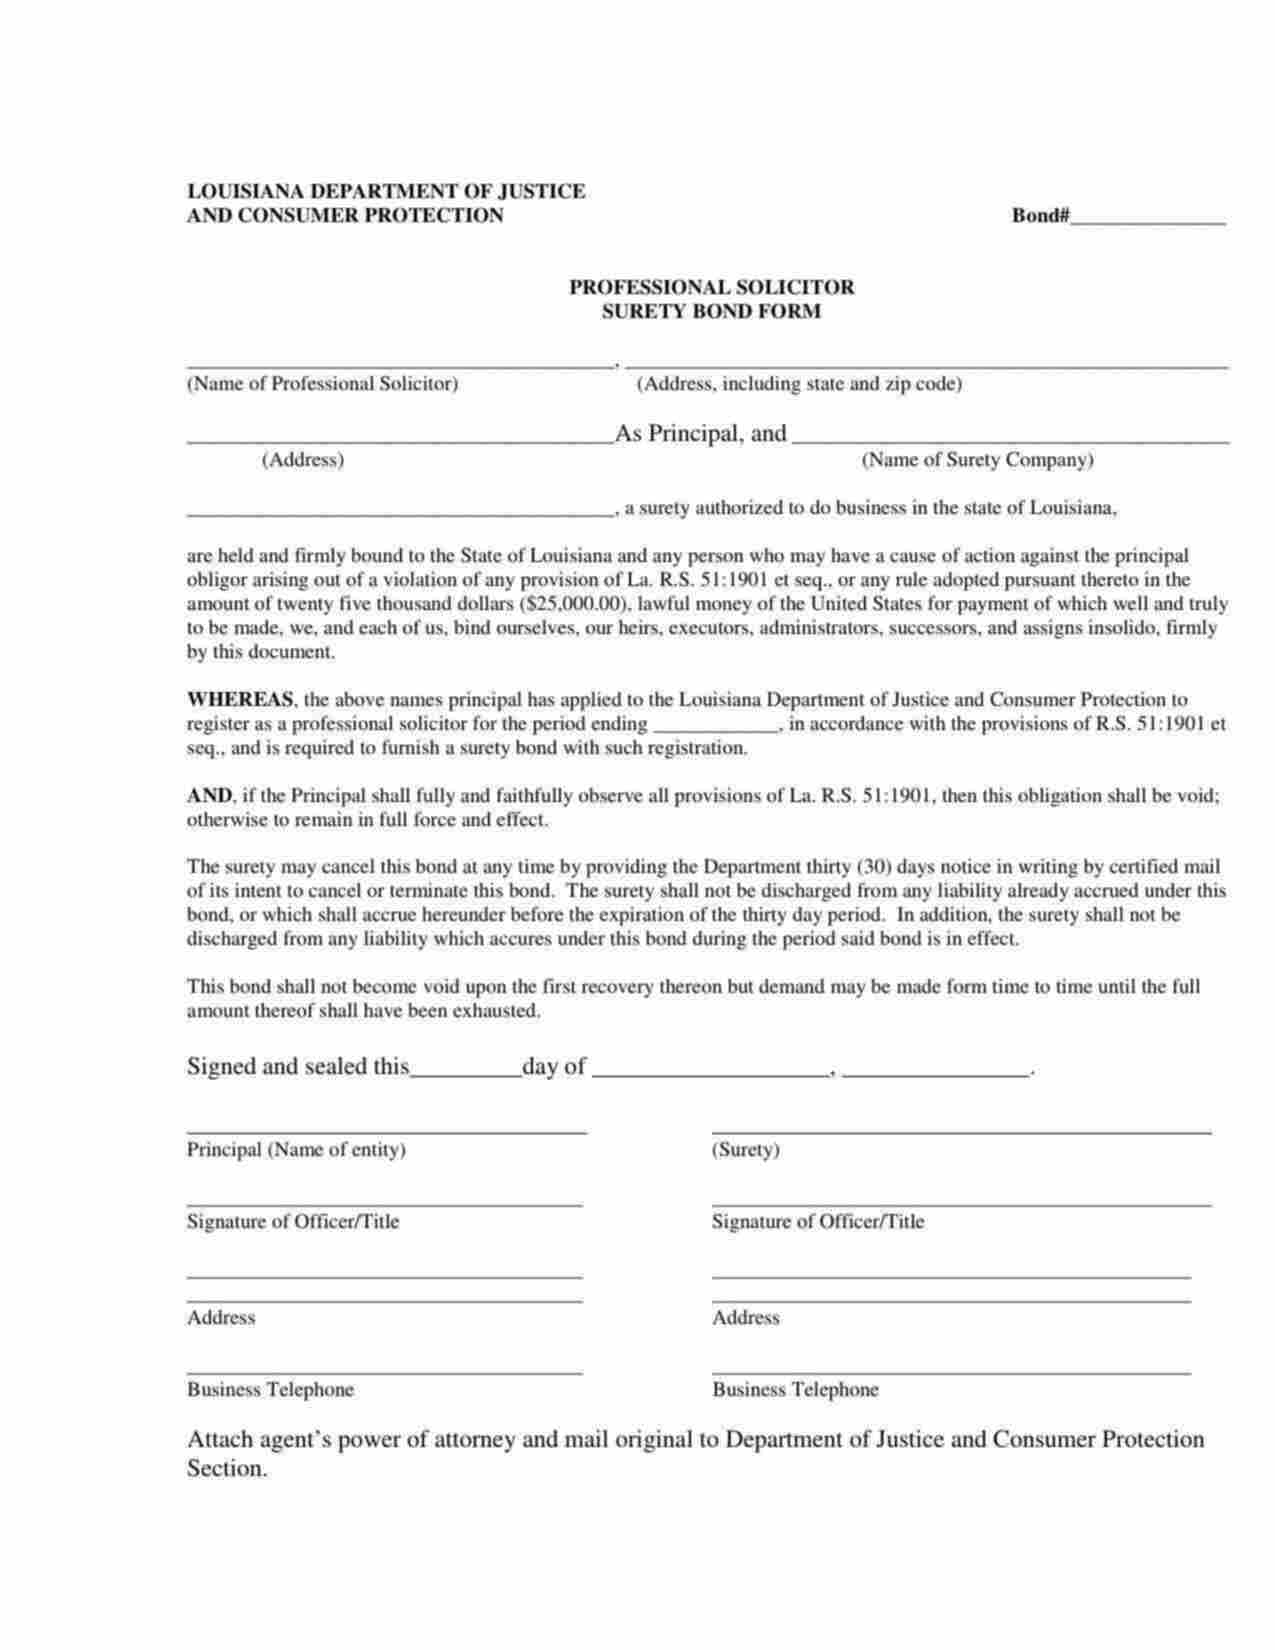 Louisiana Professional Solicitor Bond Form